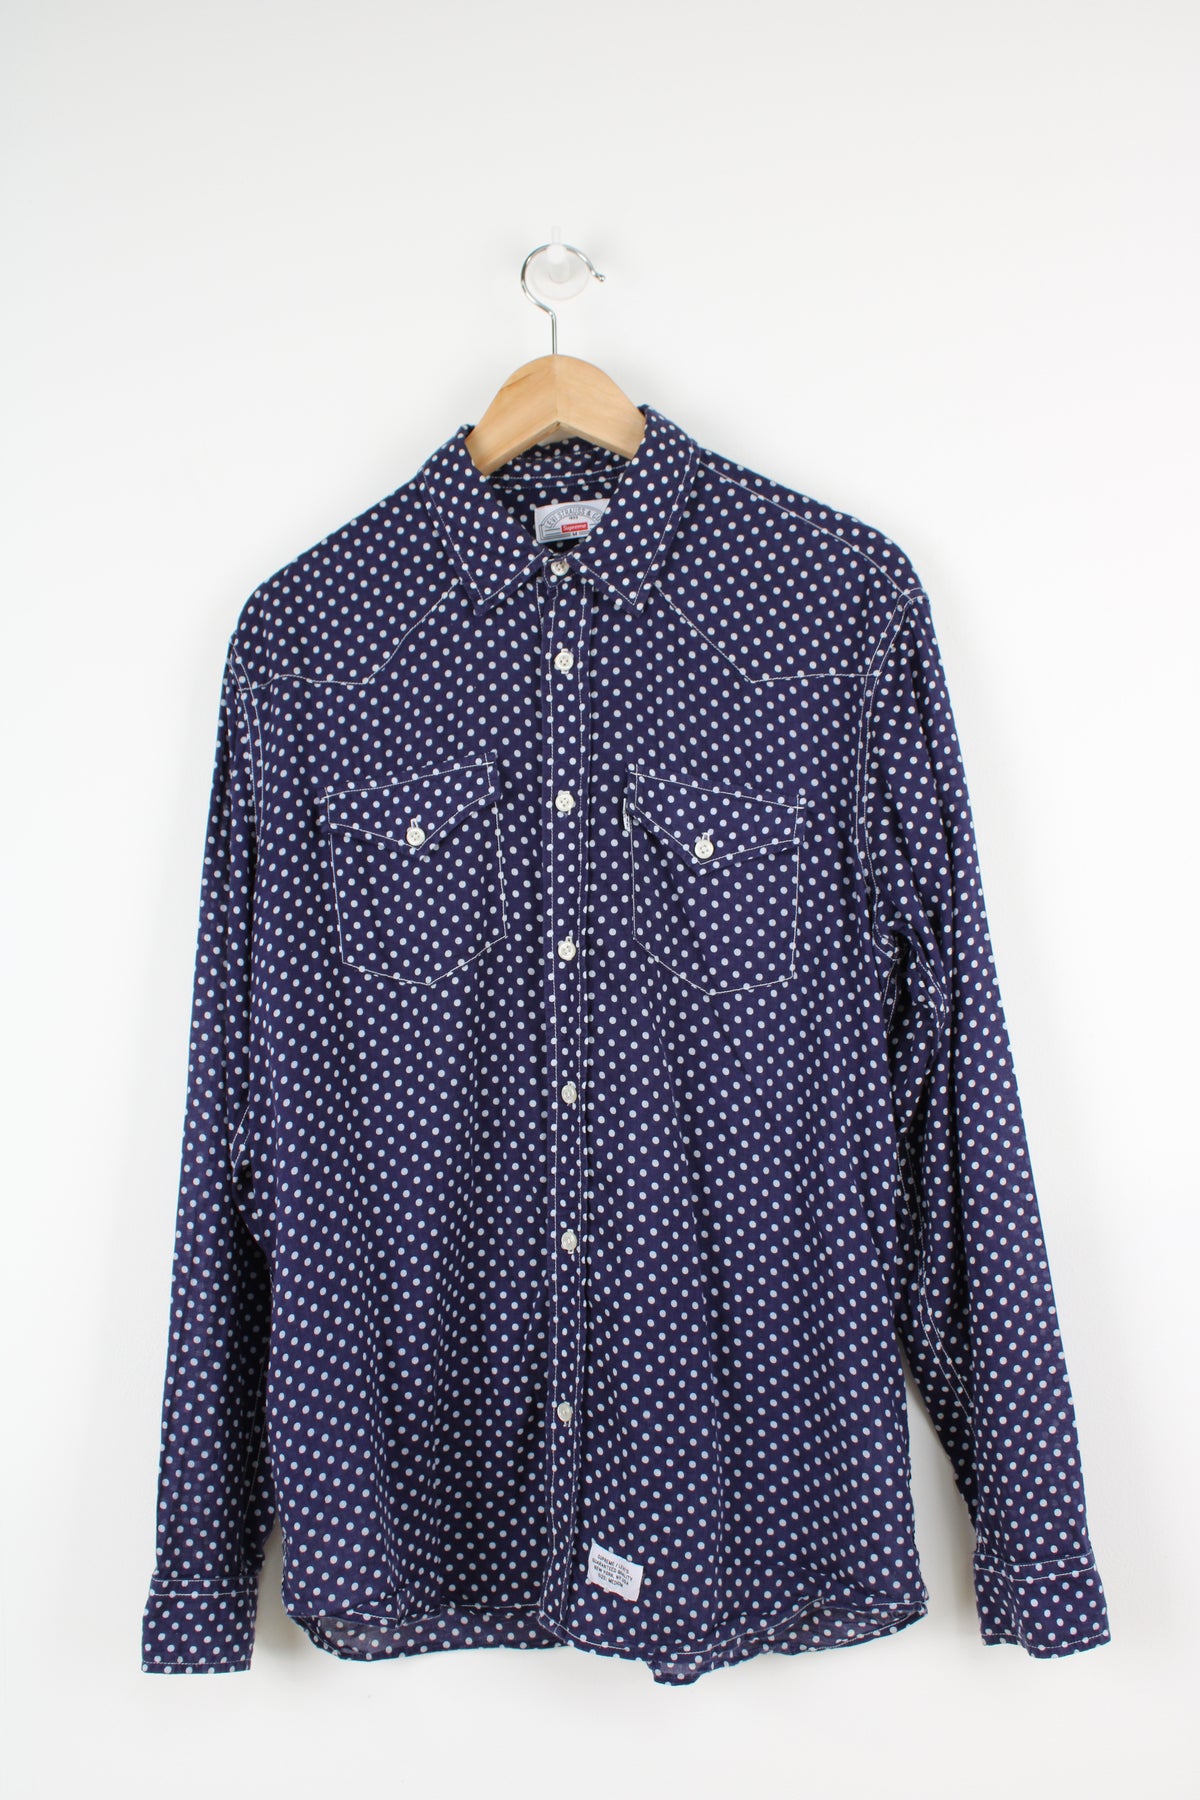 Levi's x Supreme Shirt (M) – VintageFolk